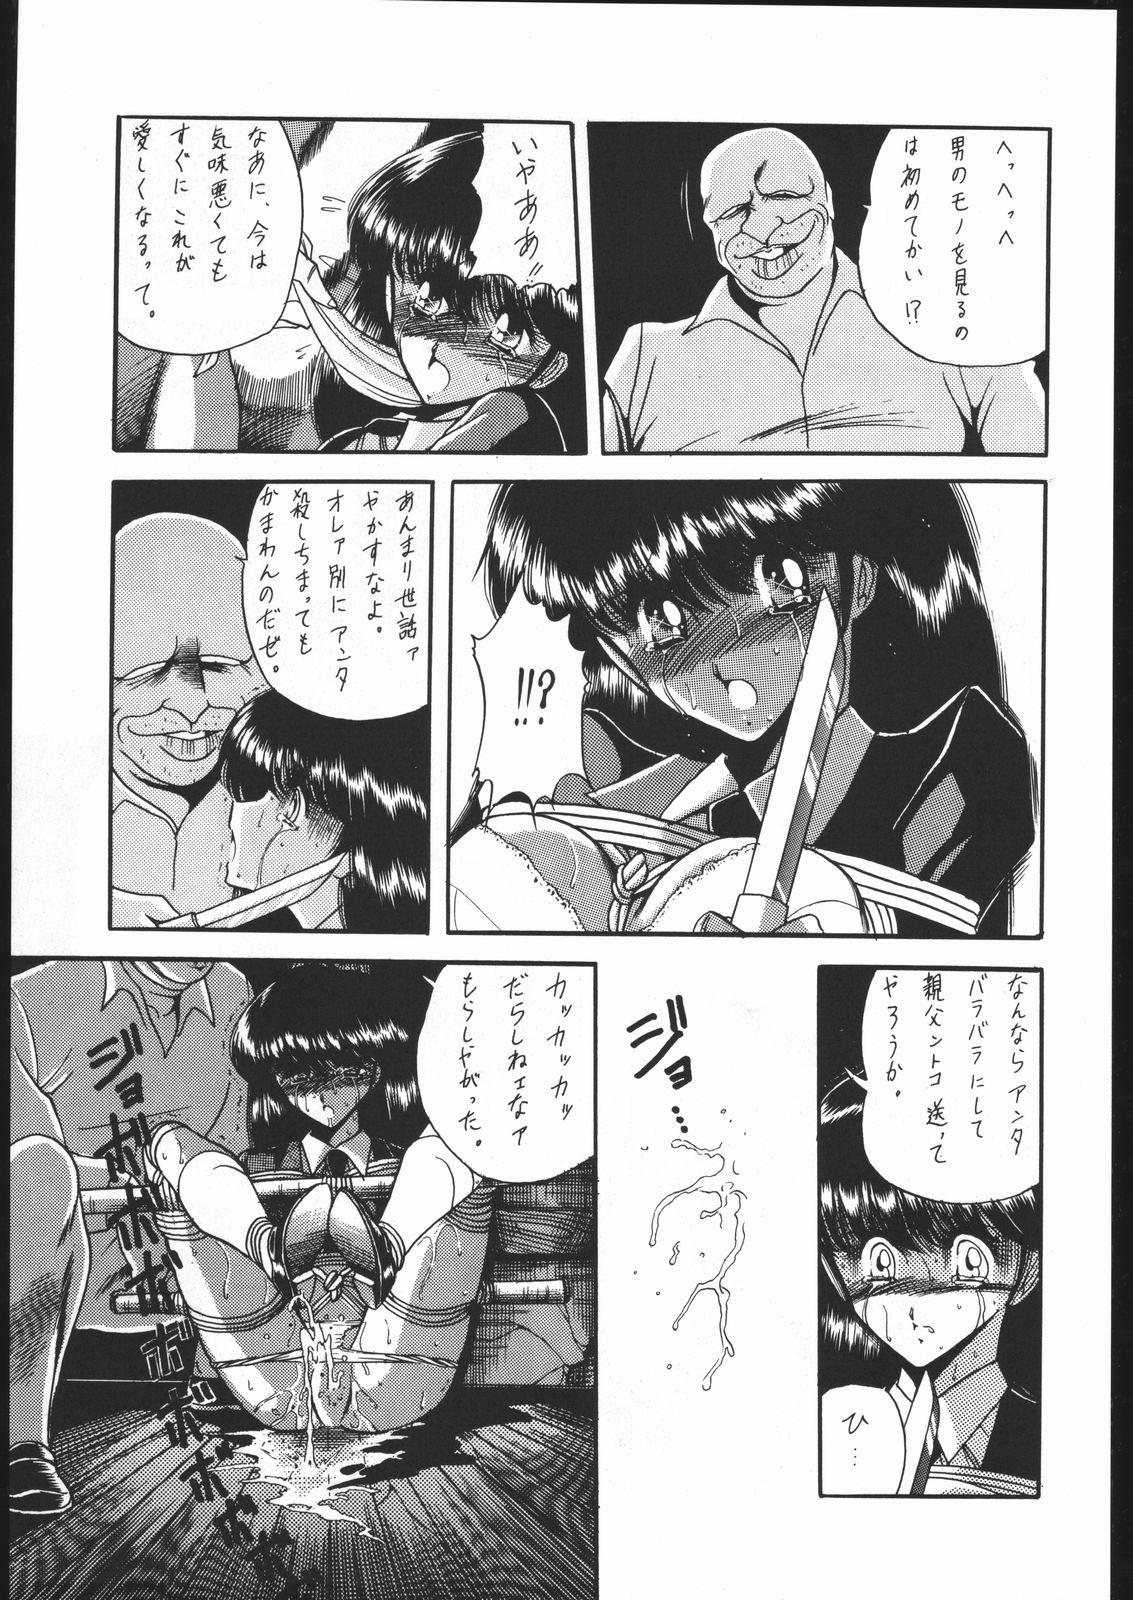 Slut Gekkou Kitan Wakakusa no Shou - Sailor moon Strap On - Page 10